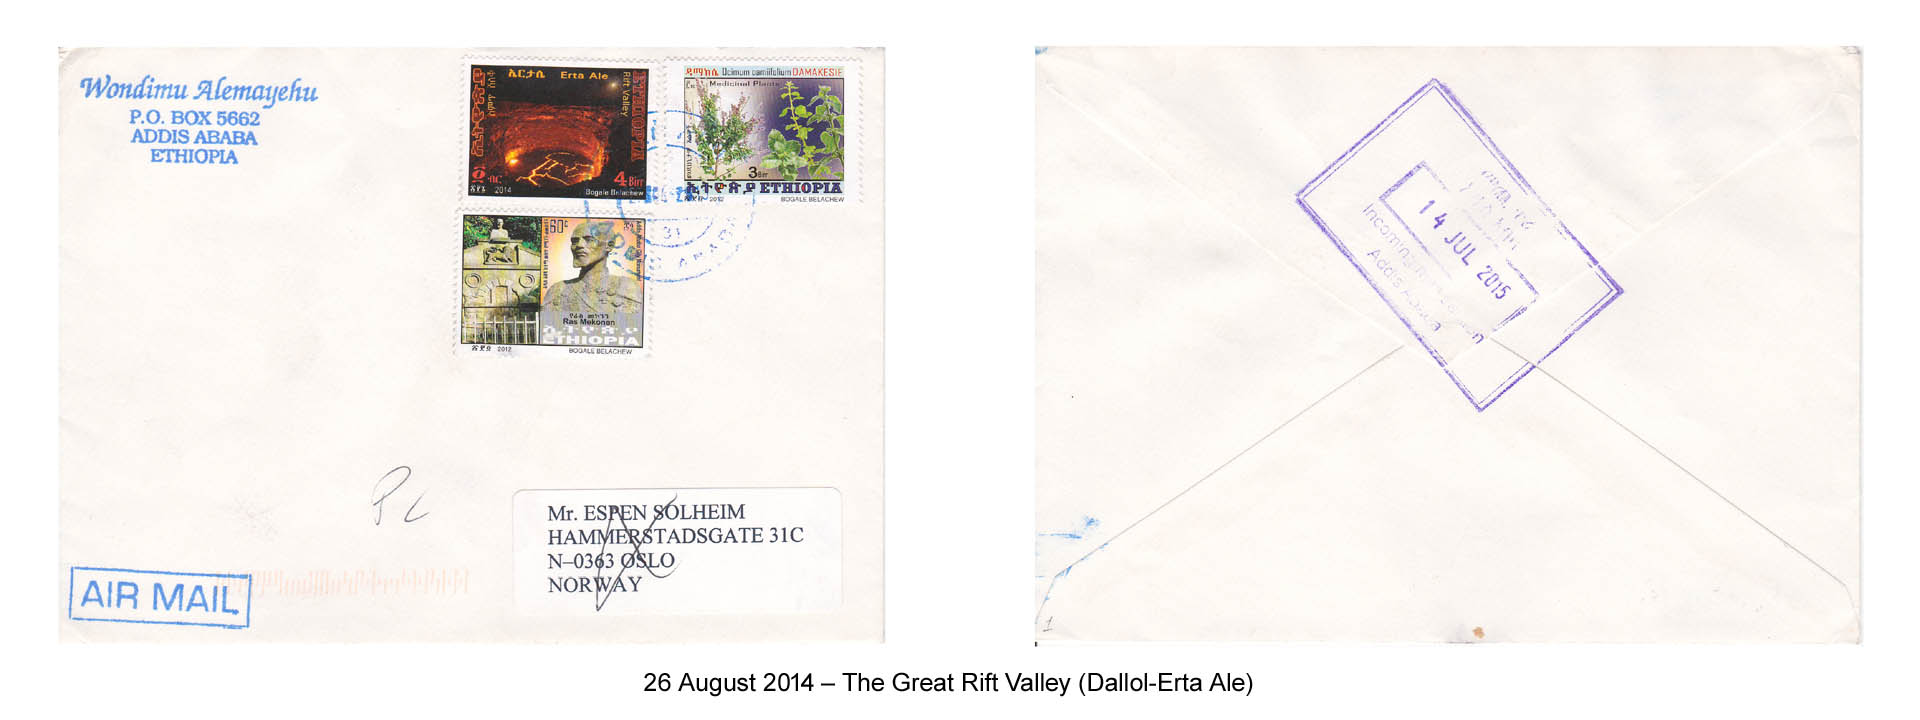 20140826 – The Great Rift Valley (Dallol-Erta Ale)